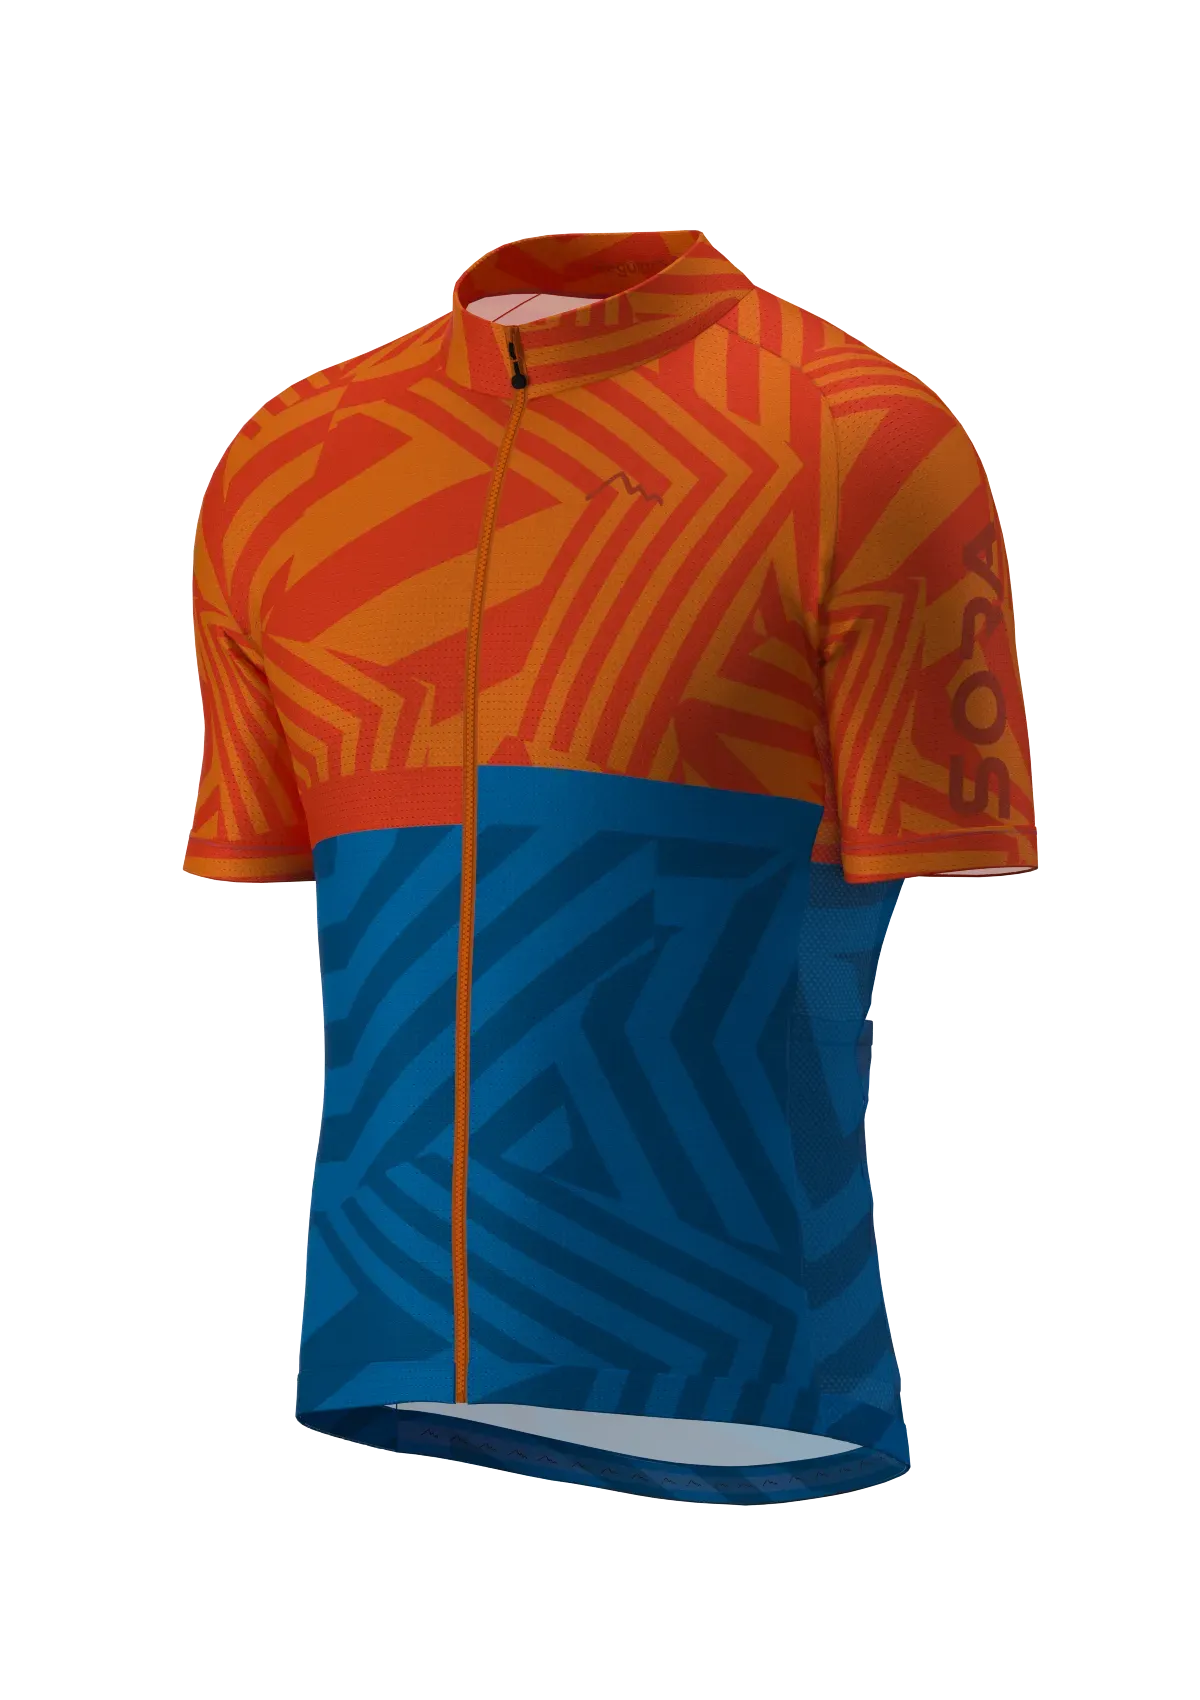 Maillot cycliste régulier orange-bleu